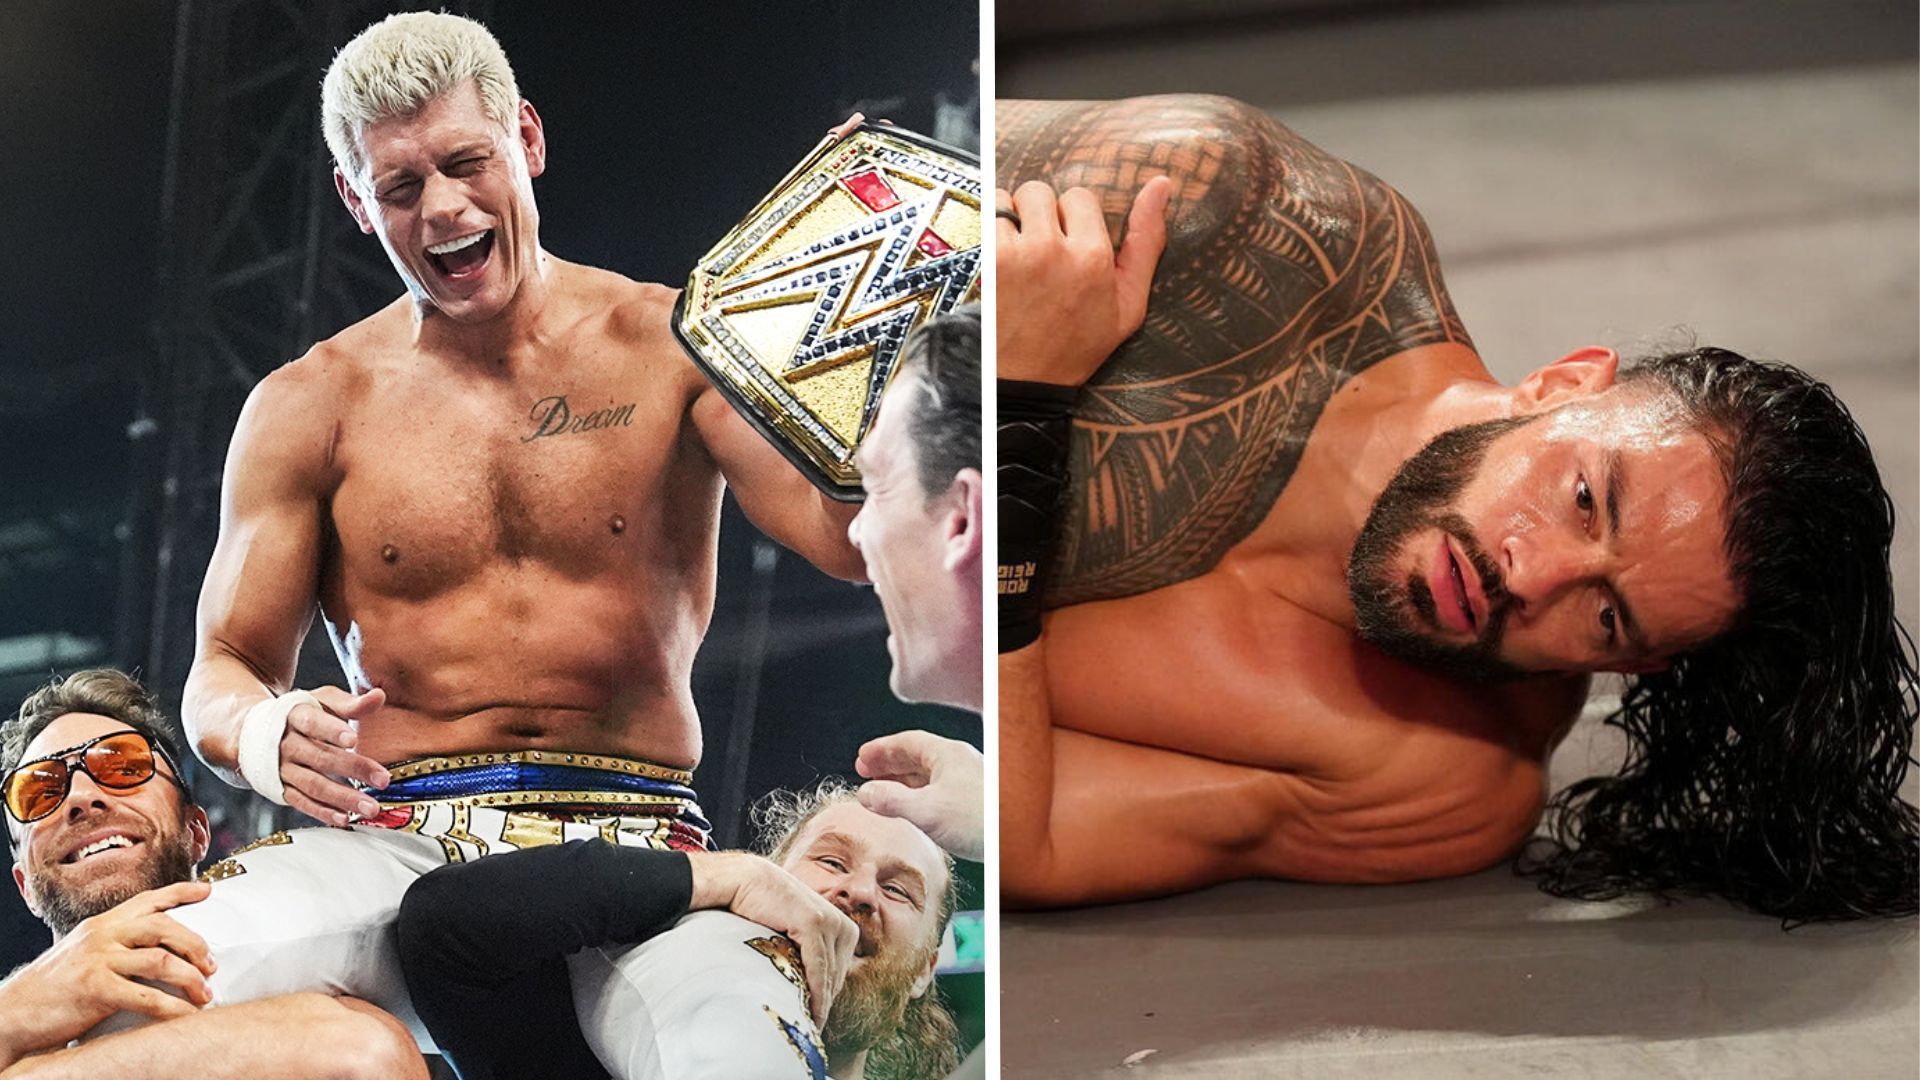 Roman Reigns and Cody Rhodes had an epic clash at WrestleMania XL